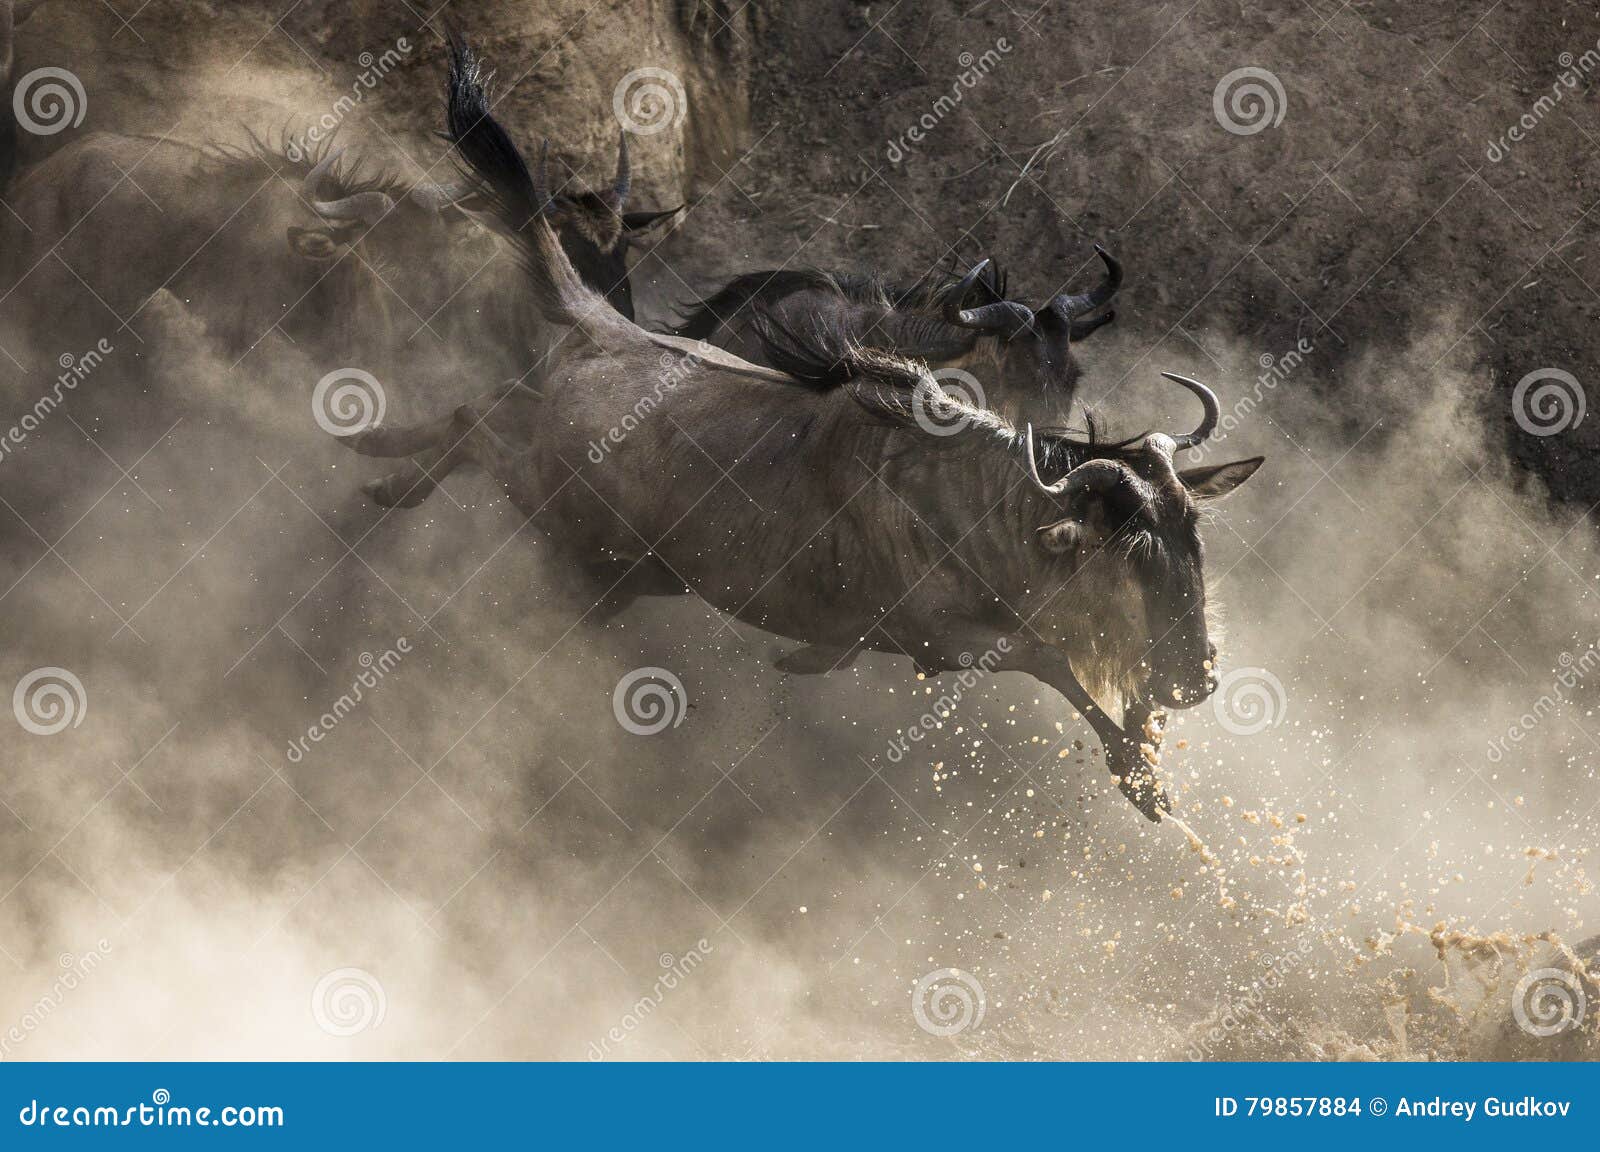 wildebeest jumping into mara river. great migration. kenya. tanzania. masai mara national park.